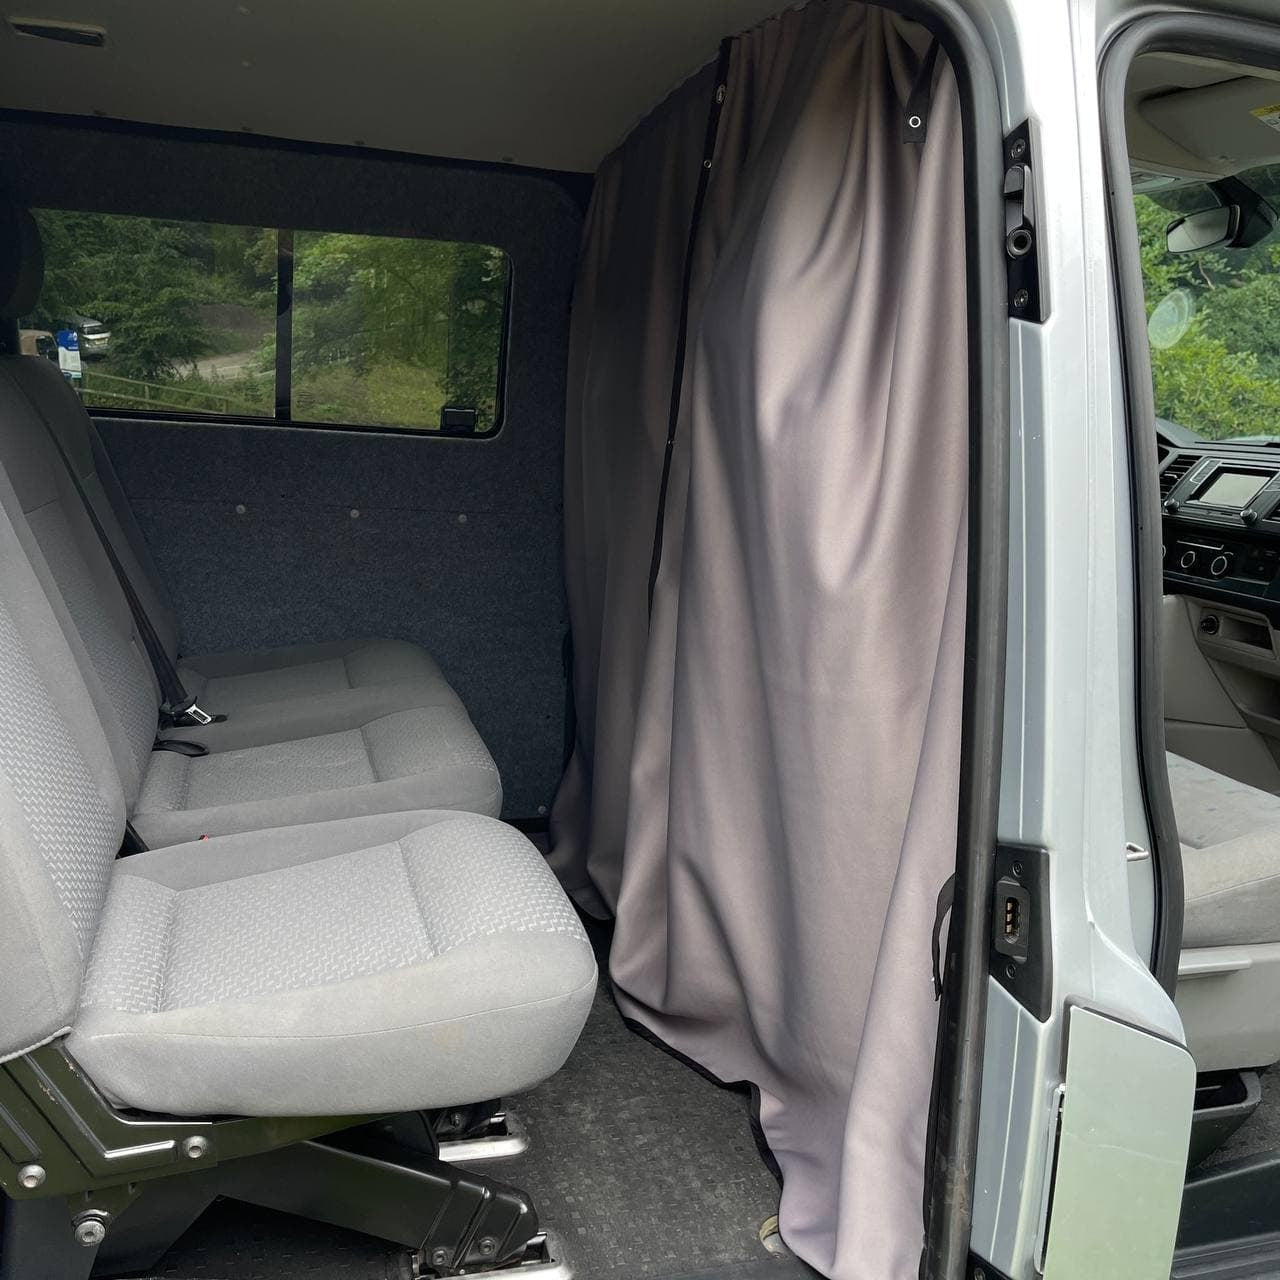 MAN TGE / New Crafter Cab Divider Curtain Kit Campervan Conversion